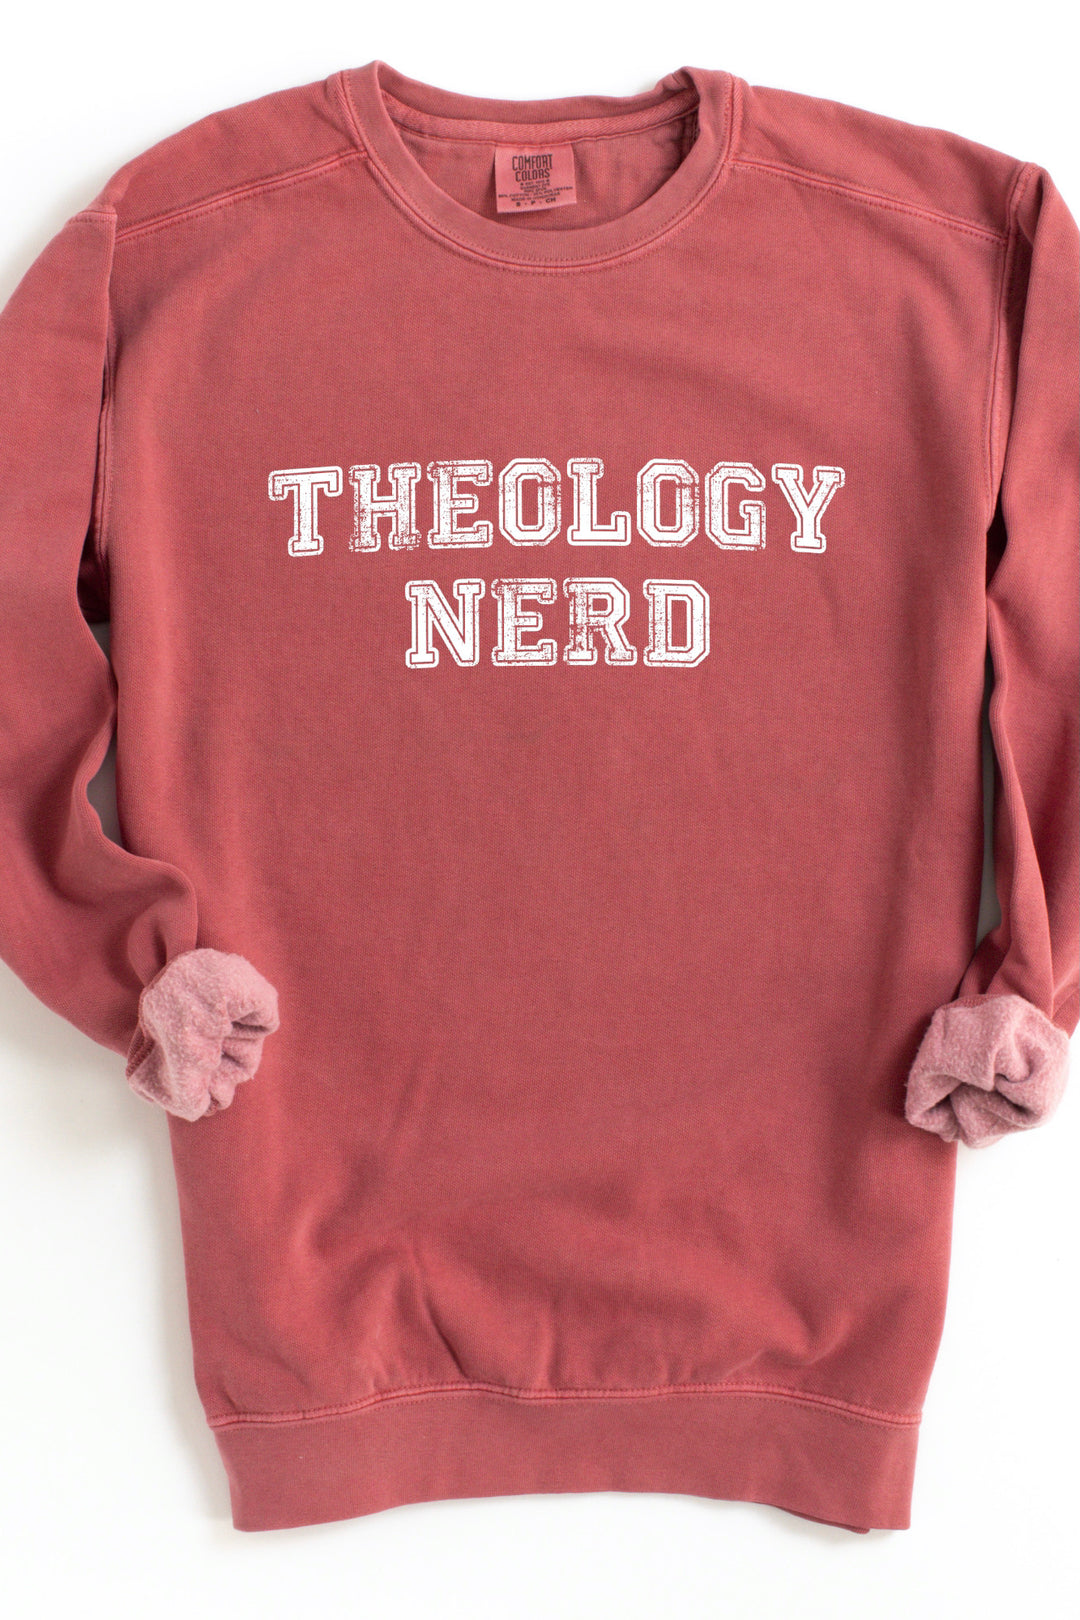 Theology Nerd Crewneck Pullover